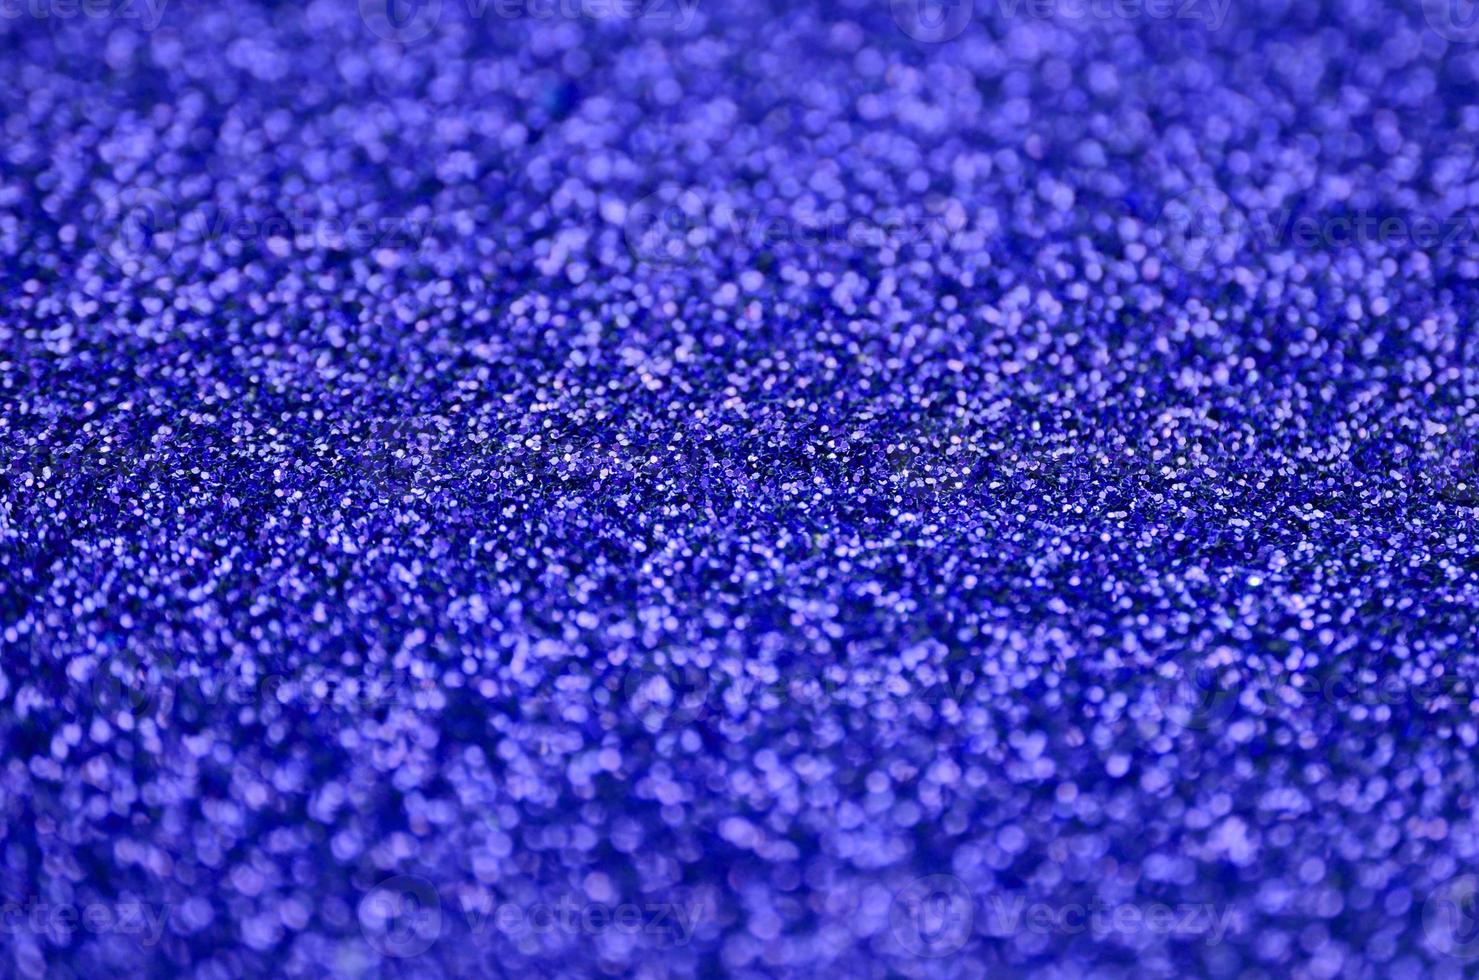 lentejuelas decorativas azules. imagen de fondo con luces bokeh brillantes de elementos pequeños foto